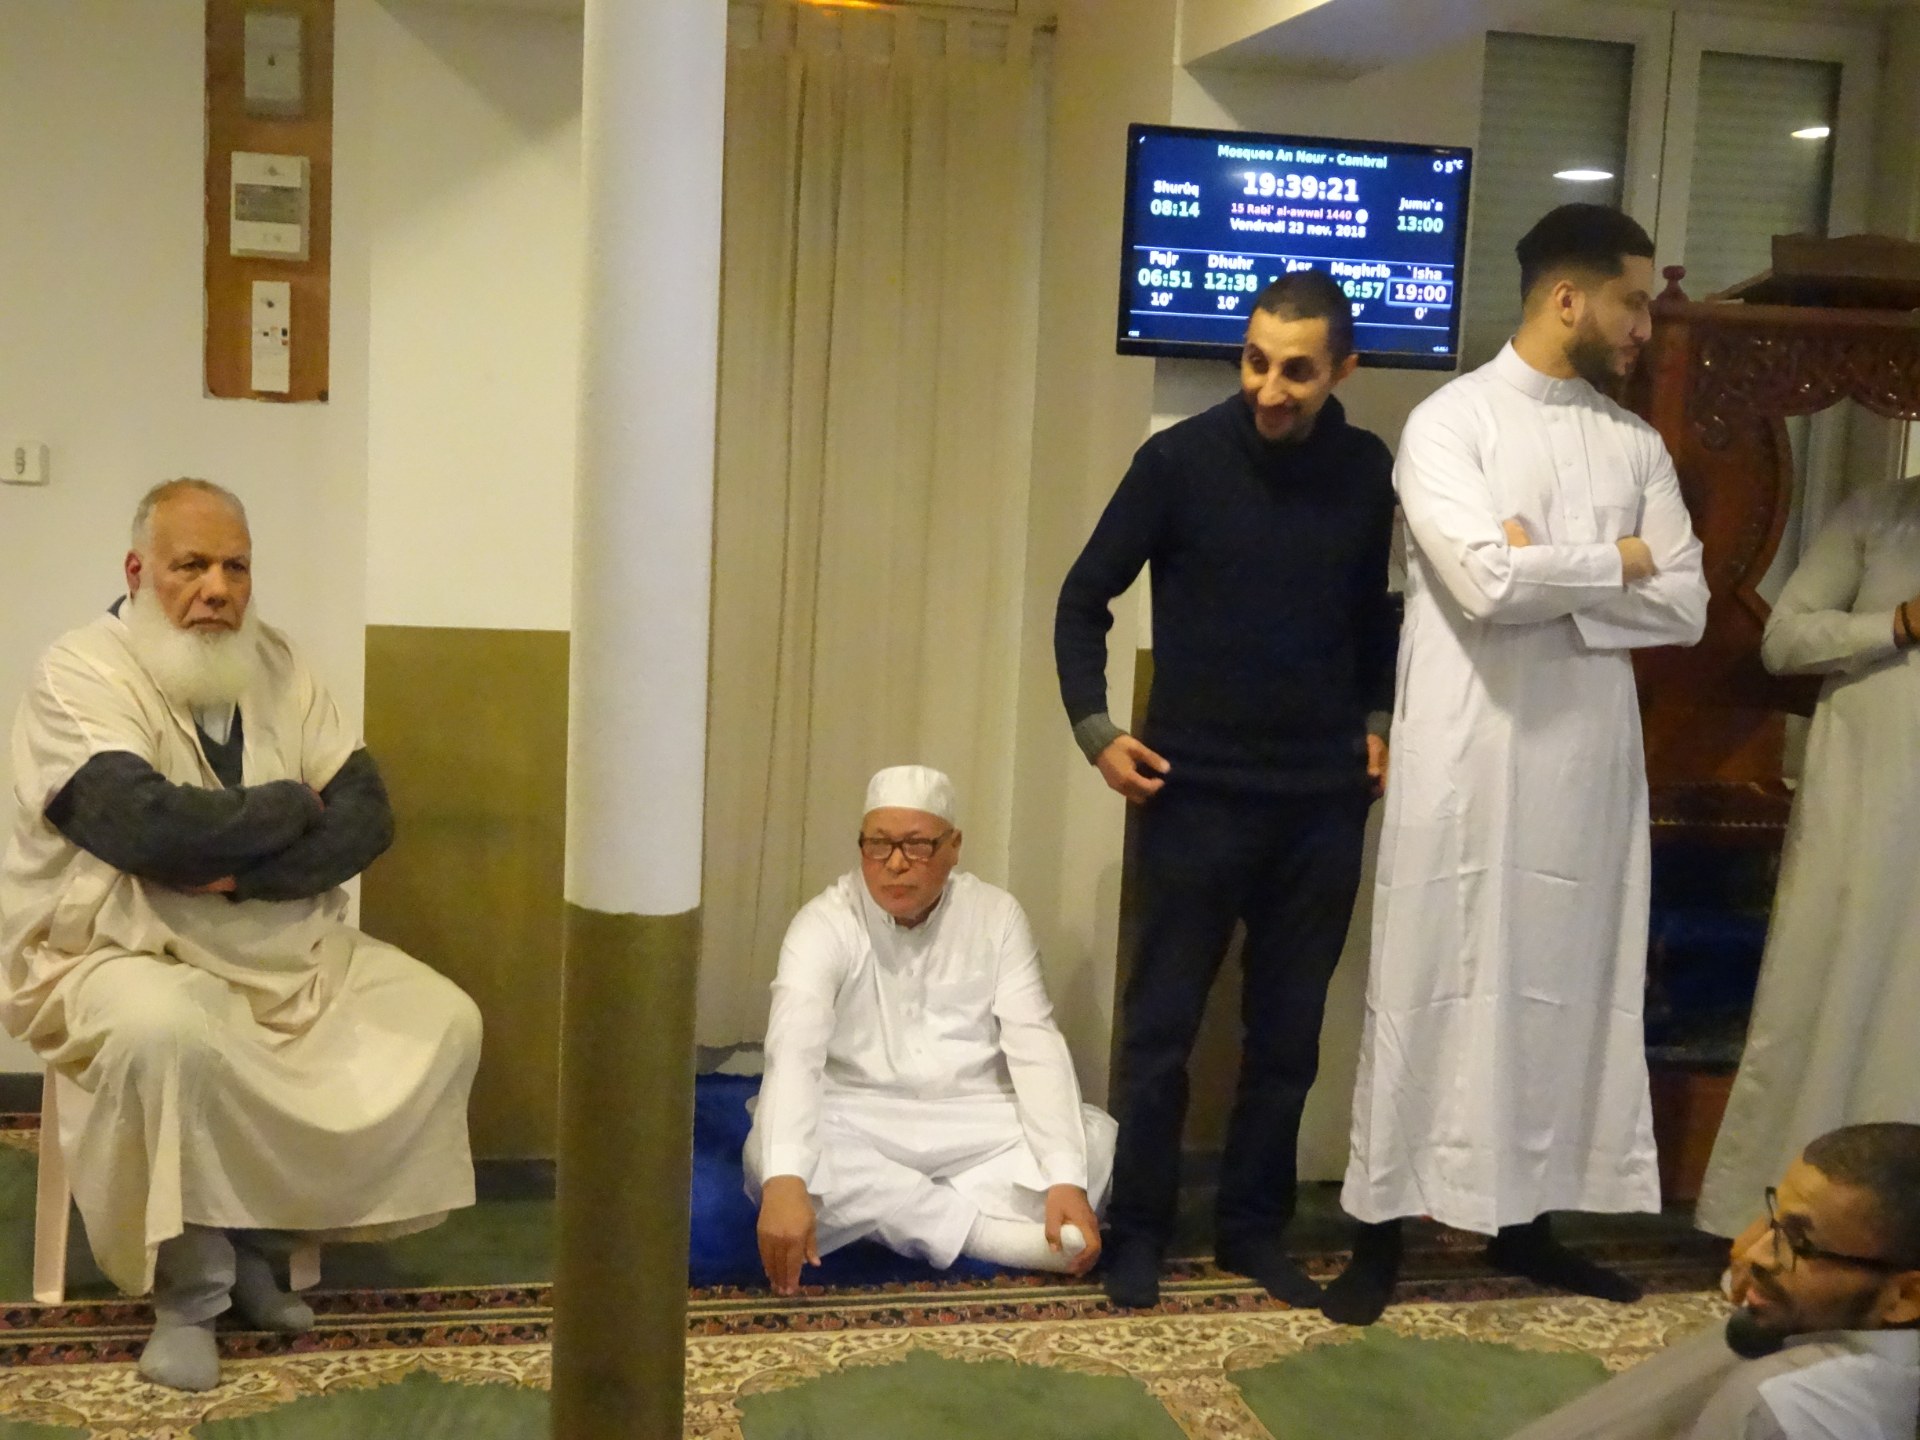 Visite mosquee 2018 -11-23 (5)